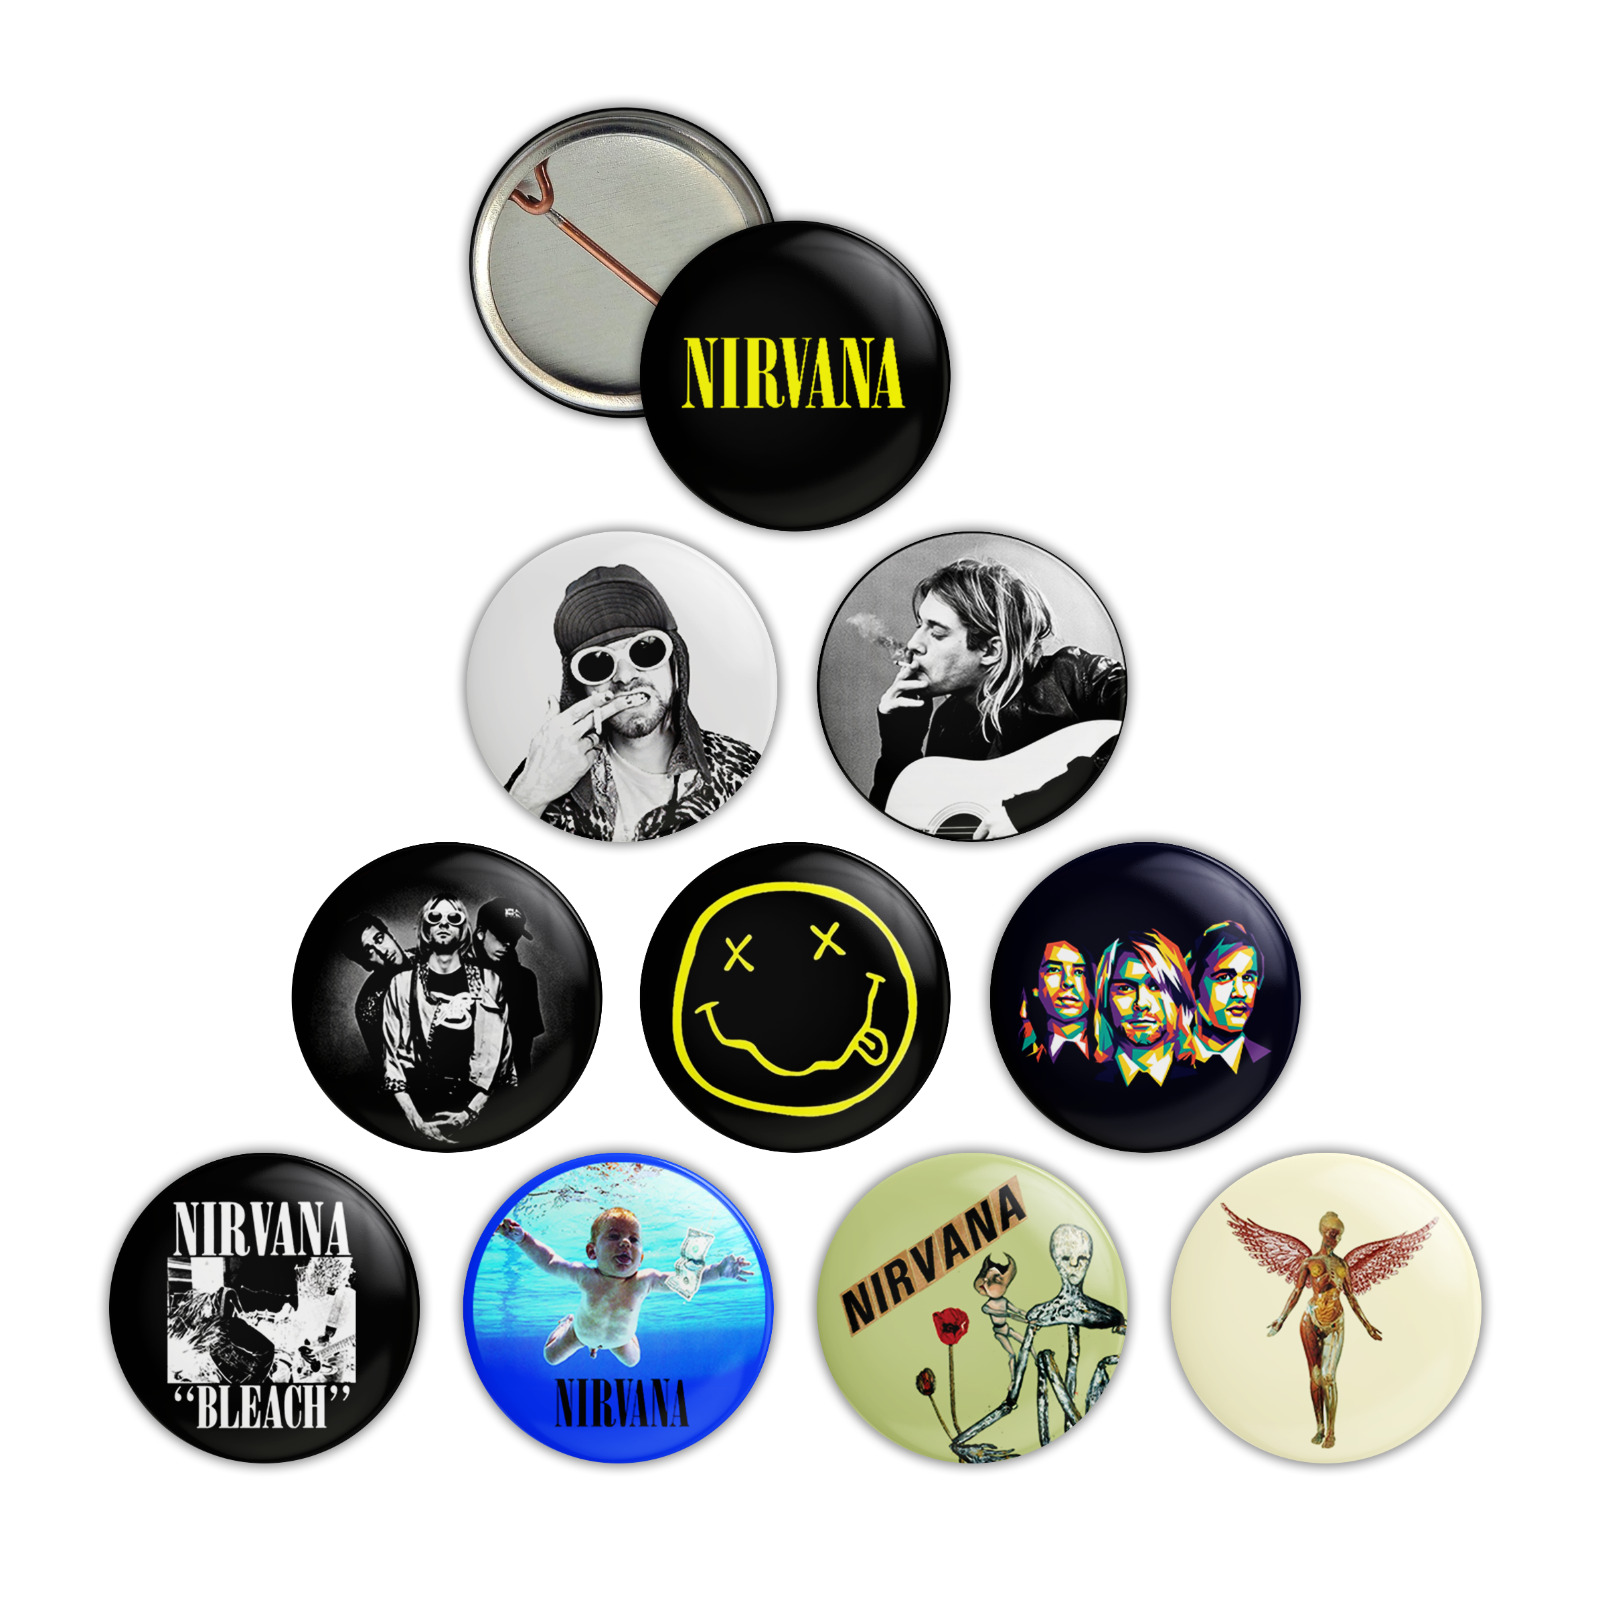 Nirvana PIN/BUTTON SET, Collectible Merchandise 1990s Rock/Grunge/Alternative